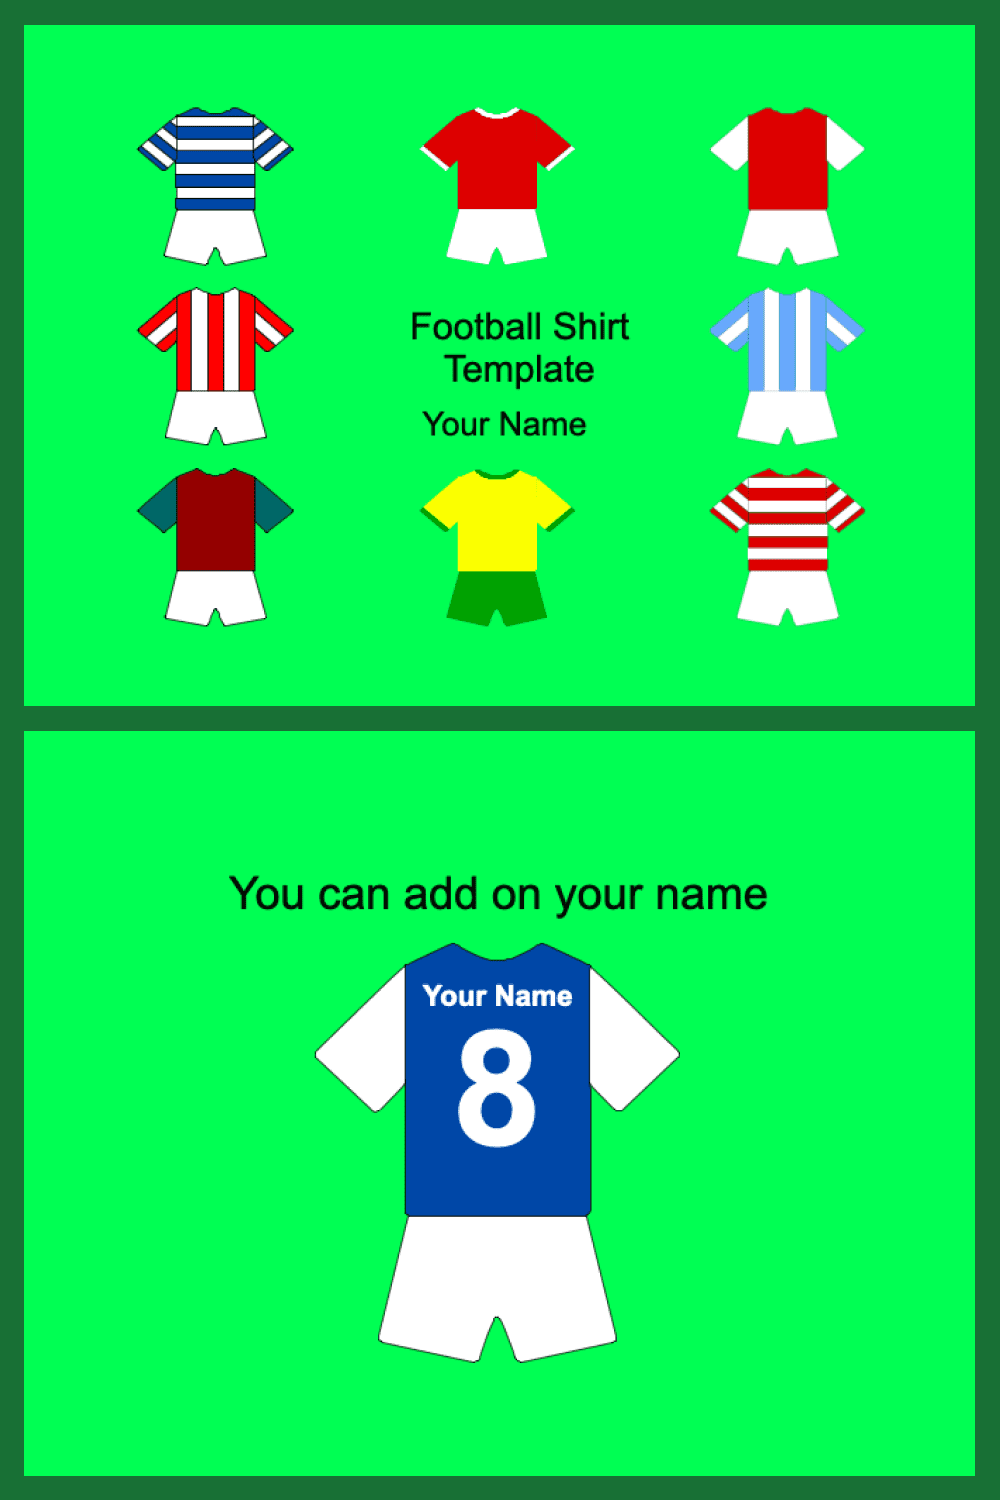 Football shirts template.